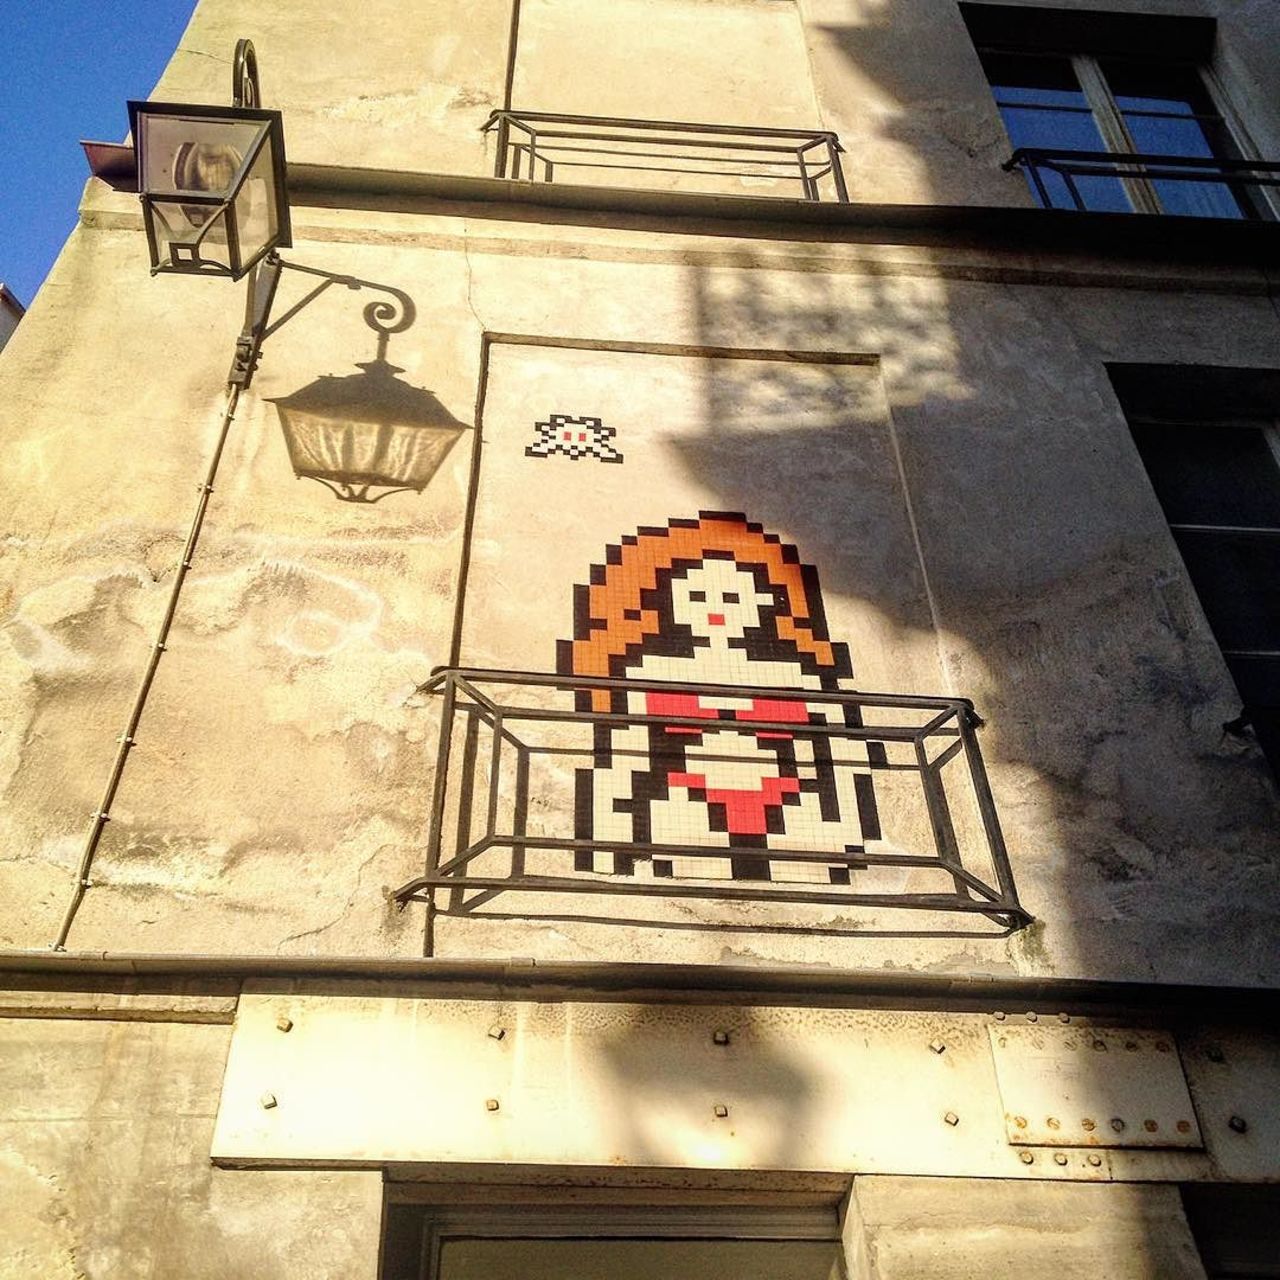 circumjacent_fr: #Paris #graffiti photo by genaropiano http://ift.tt/1O3Dstr #StreetArt https://t.co/NGw2zgO0GF